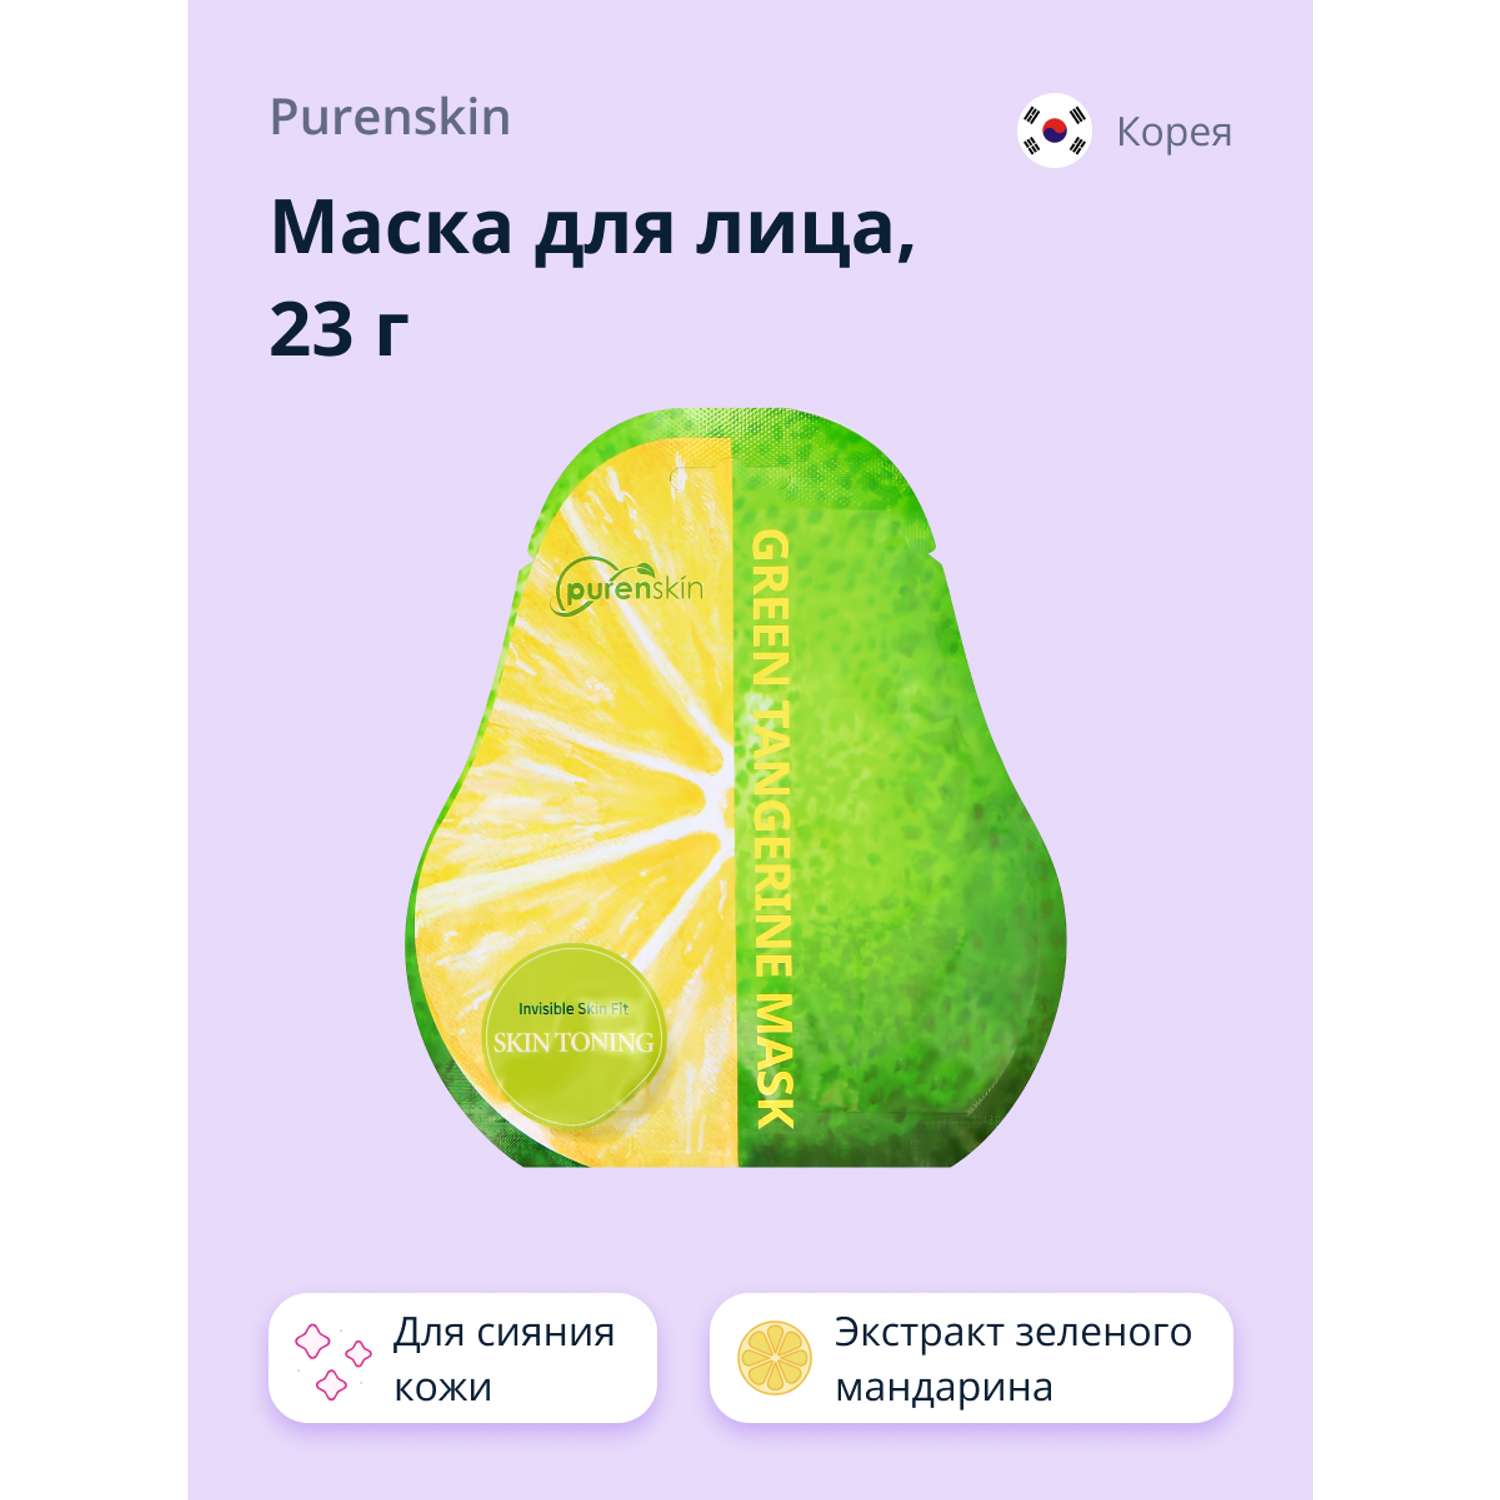 Маска тканевая Purenskin с экстрактом зеленого мандарина для сияния кожи 23 г - фото 1